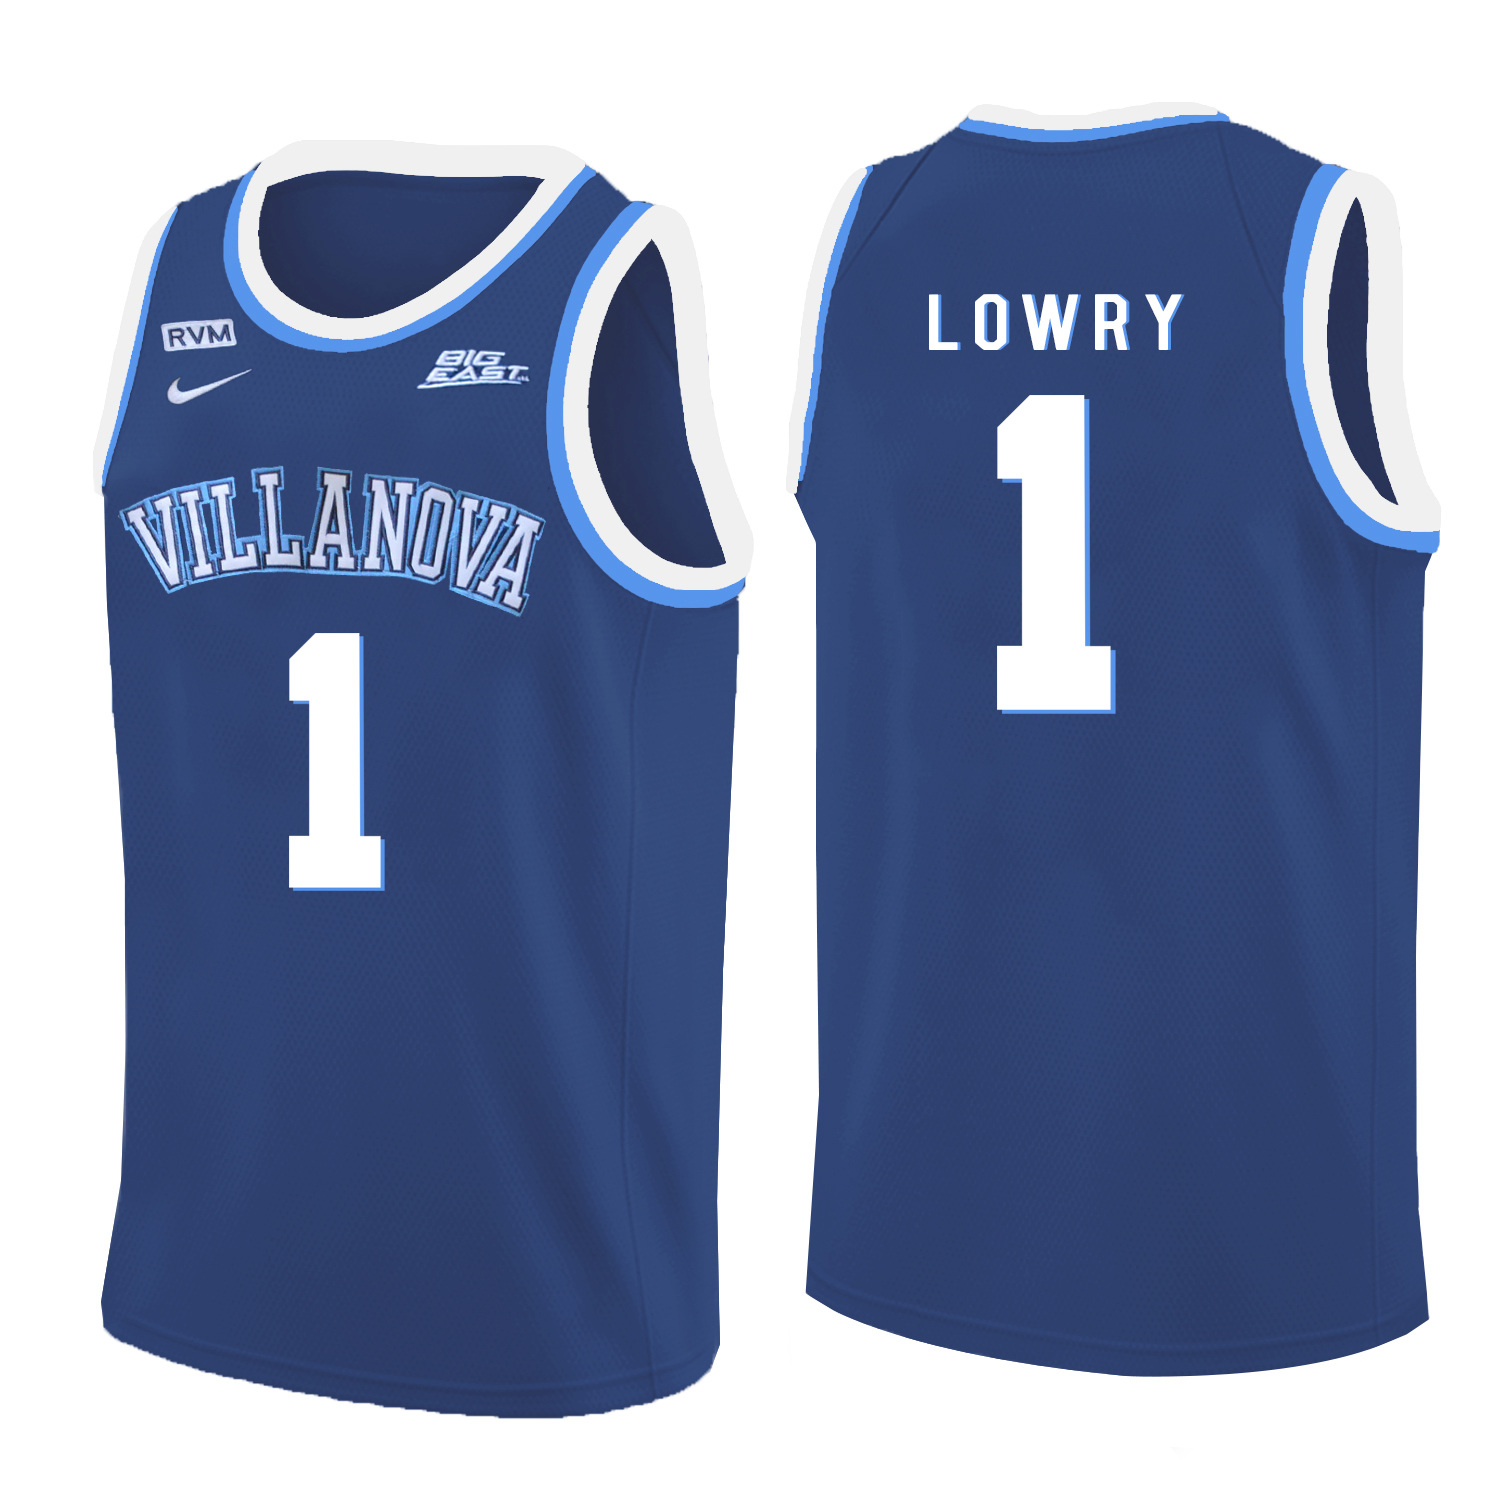 Villanova Wildcats 1 Kyle Lowry Blue College Basketball Jersey